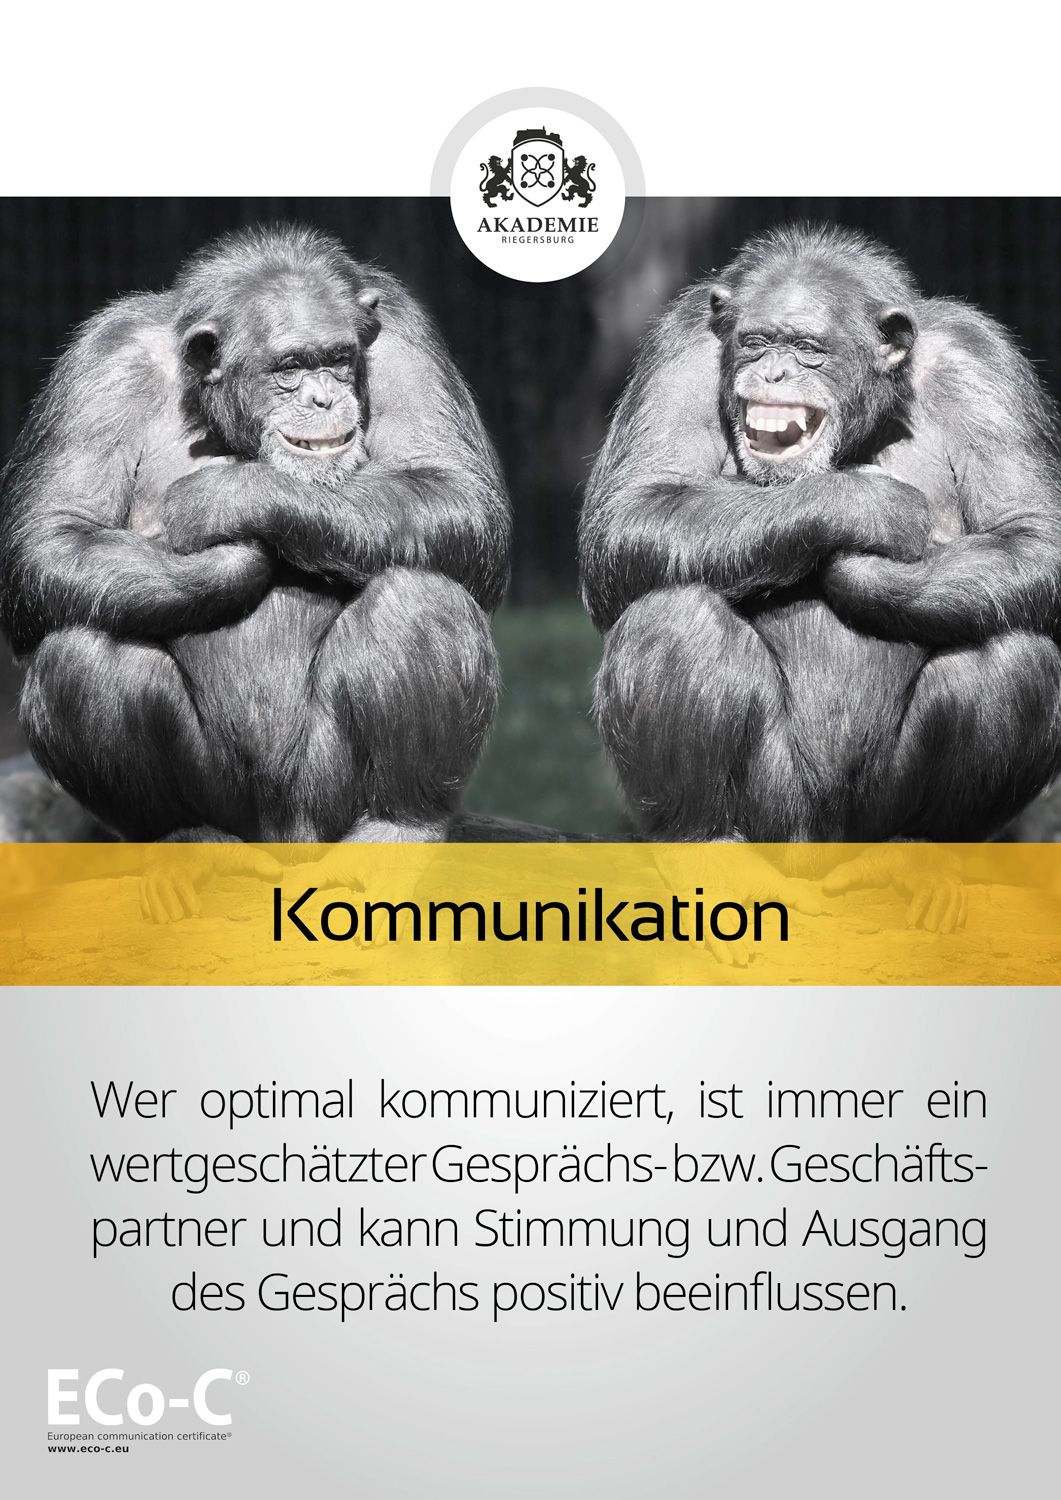 Seminar - Eco-C Modul Kommunikation 
- 
Naturbursch Training Riegersburg - Teamtraining, Kletterkurse, Hochseilgarten